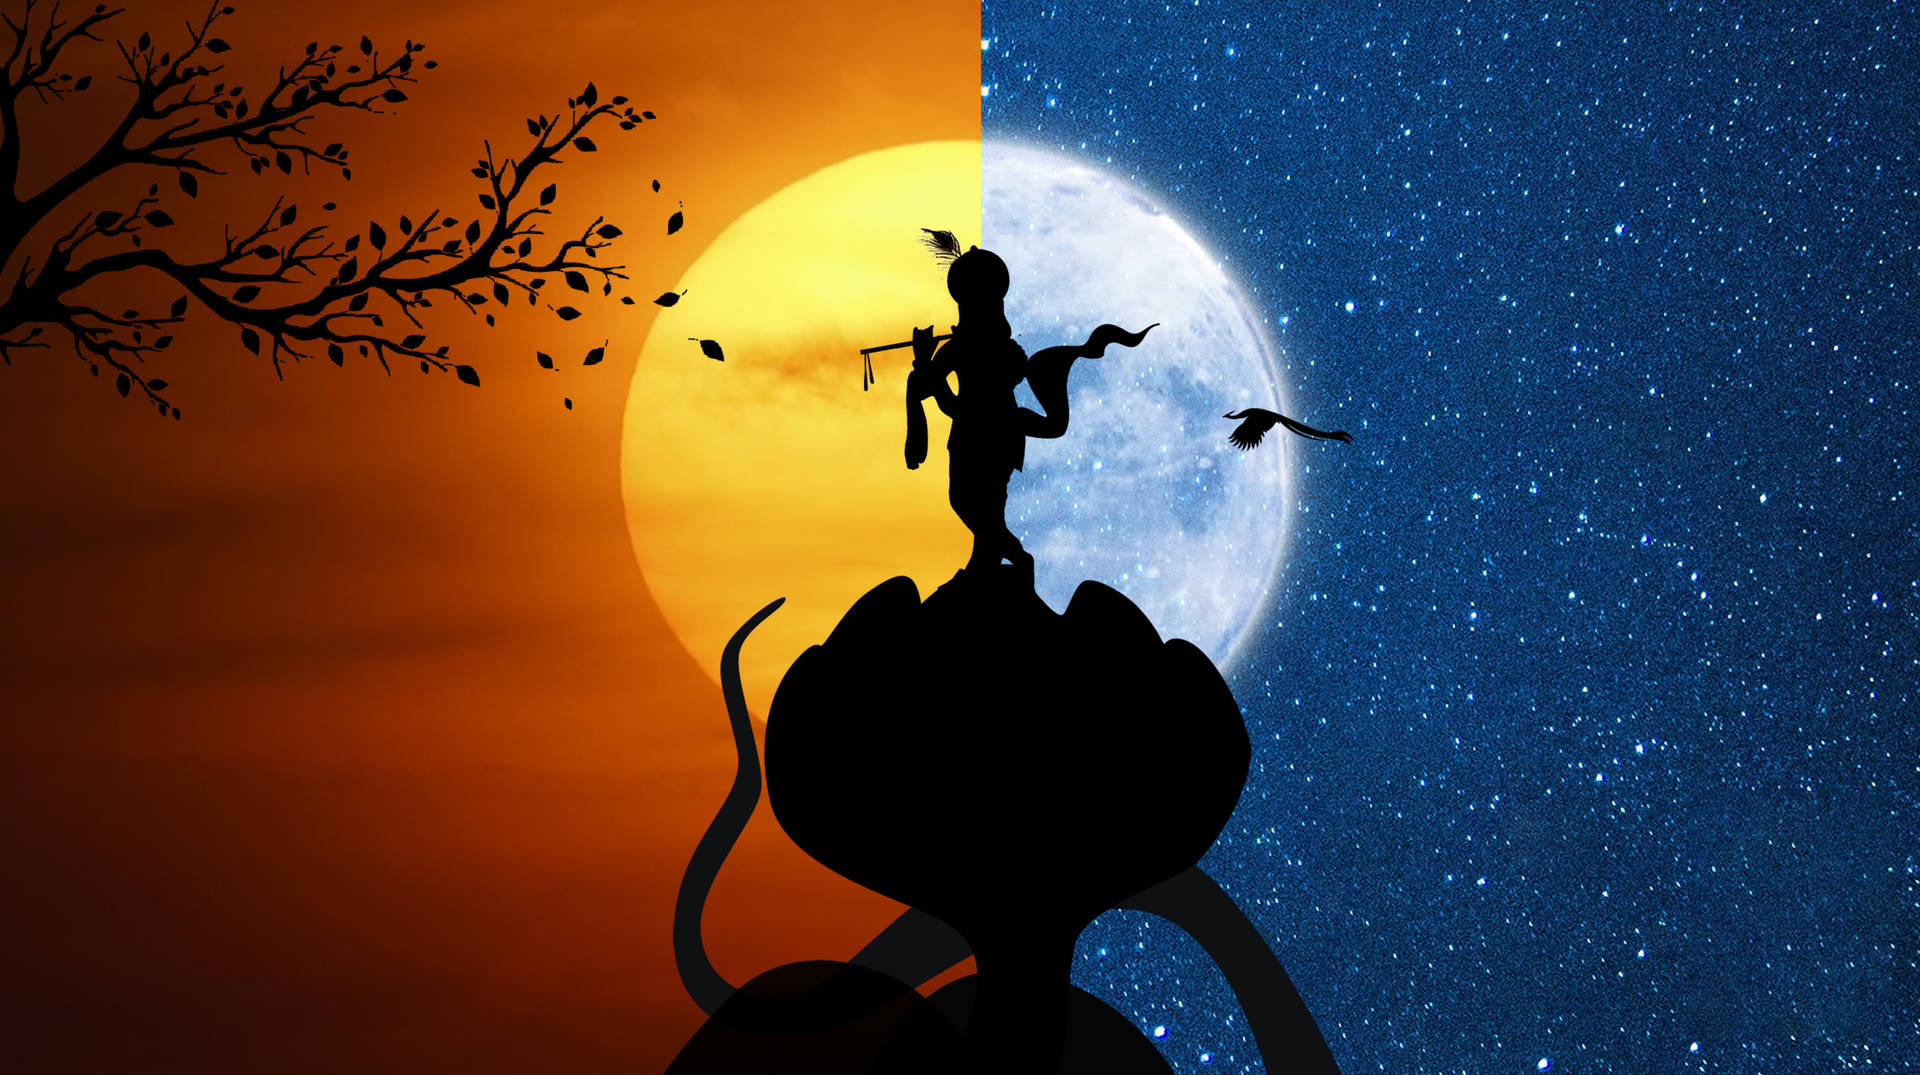 Shri Krishna Day And Night Silhouette Wallpaper